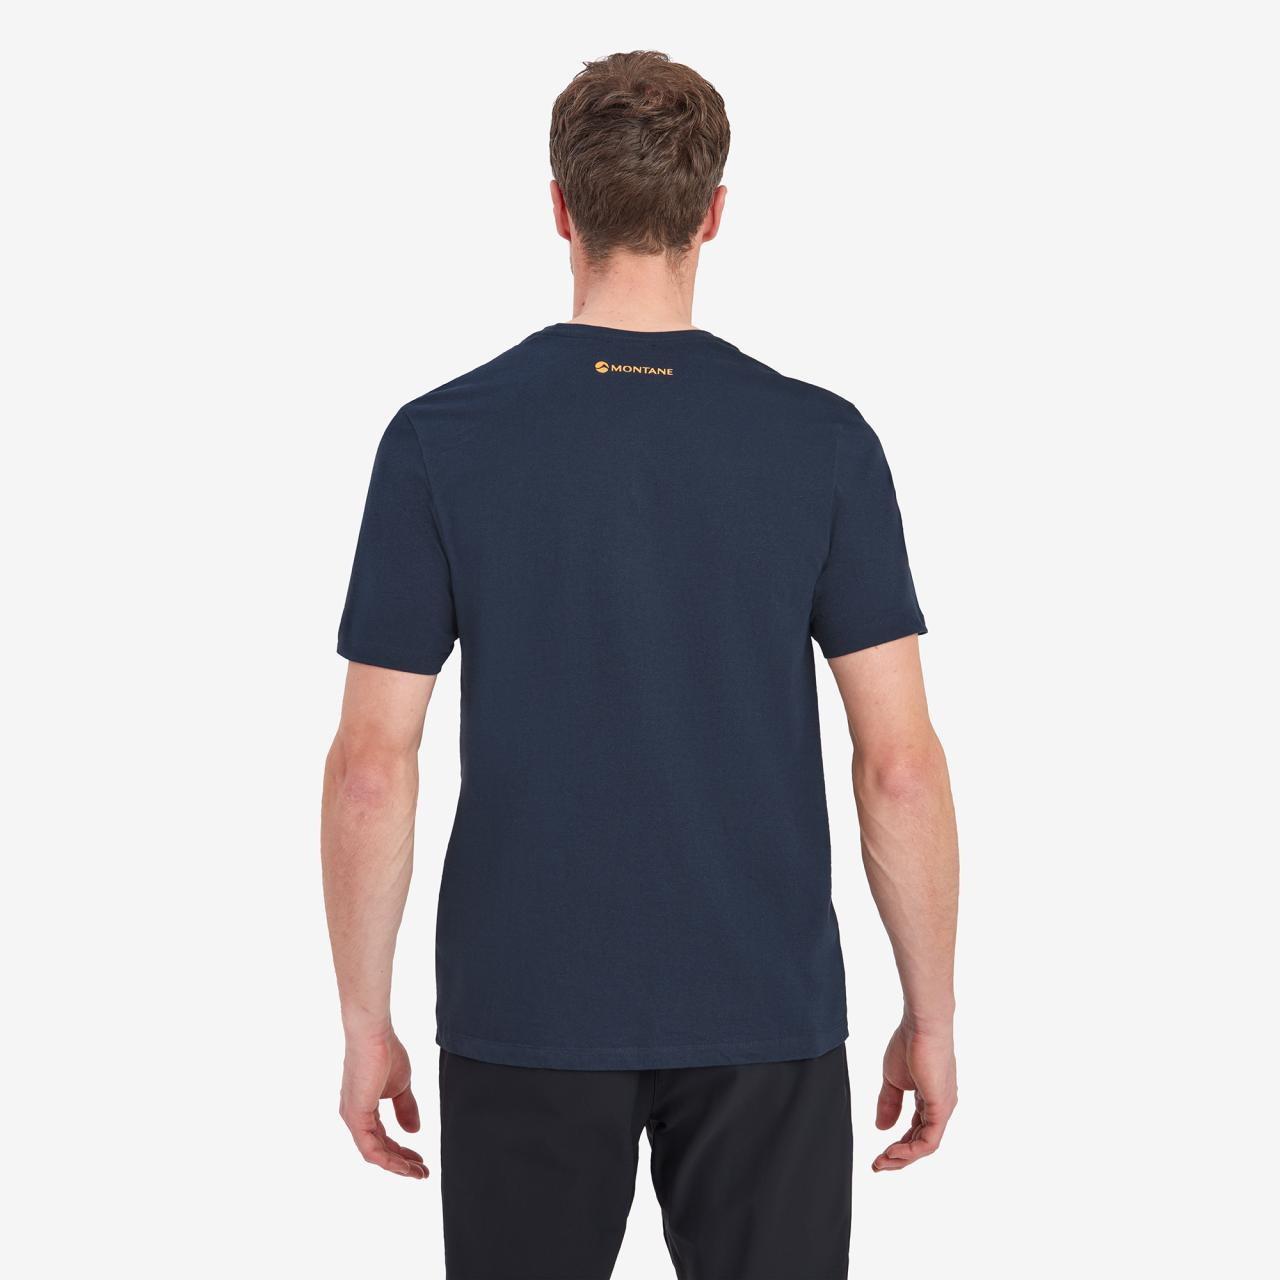 ABSTRACT T-SHIRT-ECLIPSE BLUE-M pánské triko modré